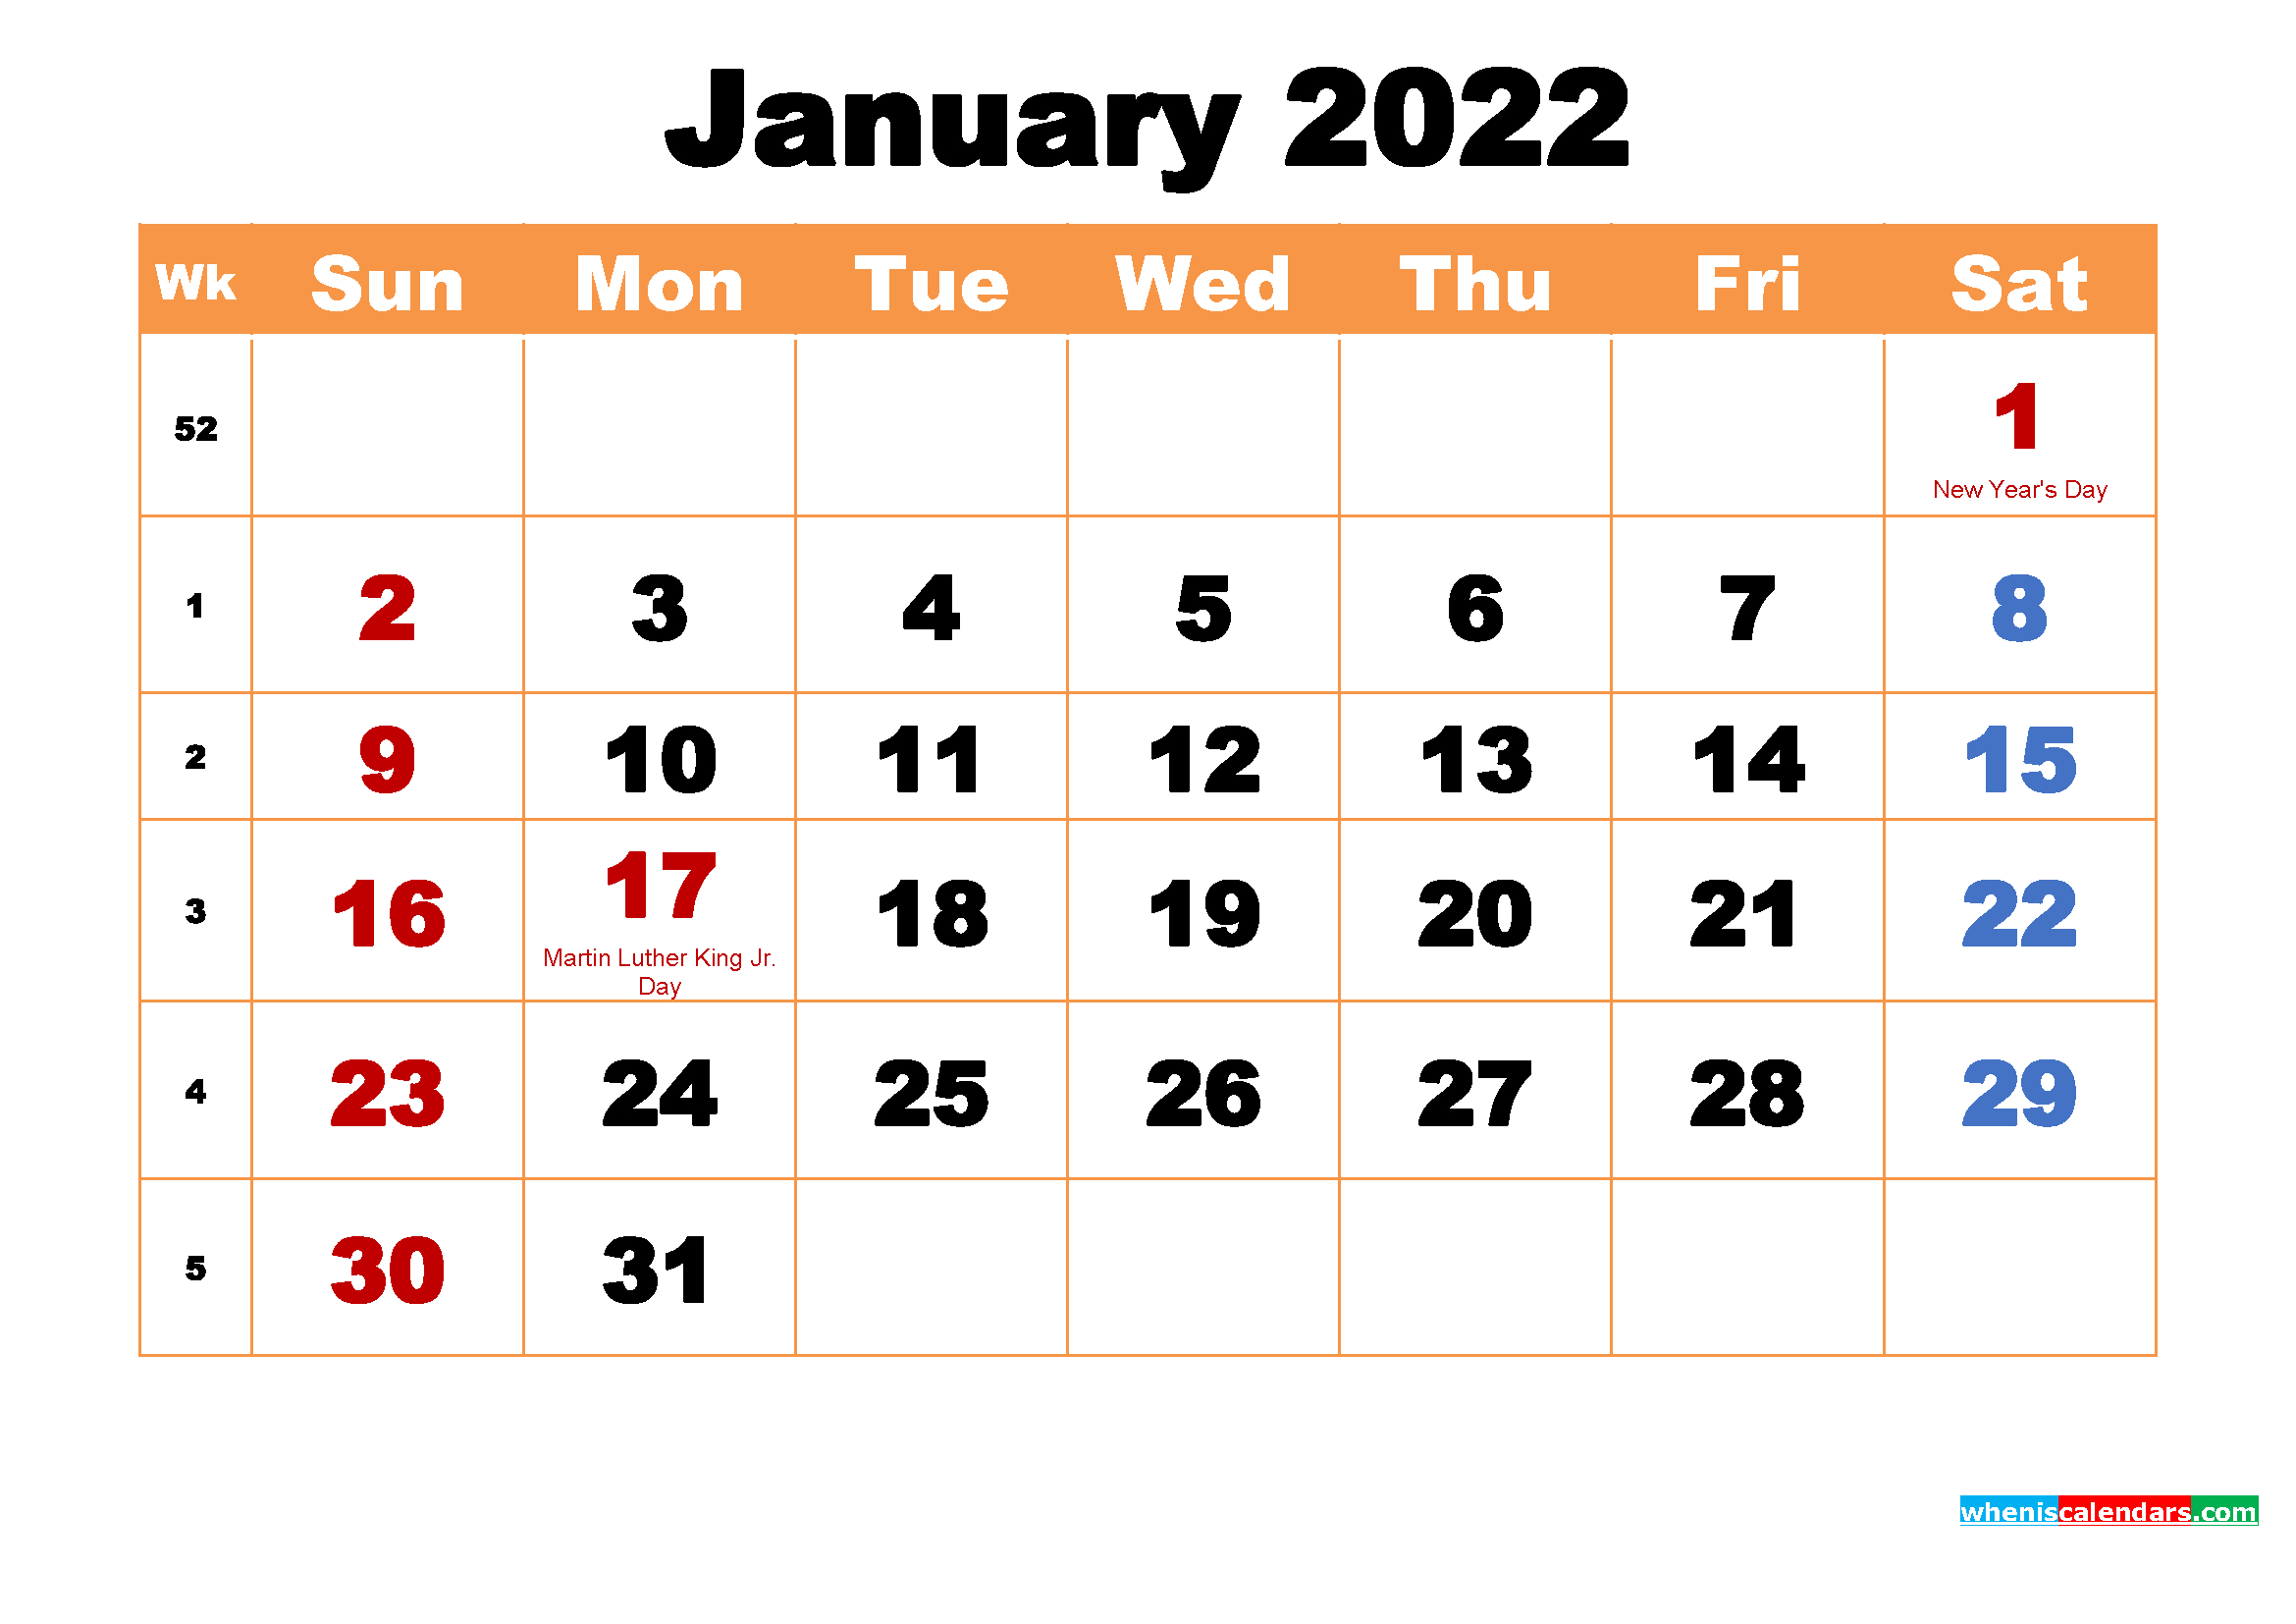 Catch Online Calendar January 2022